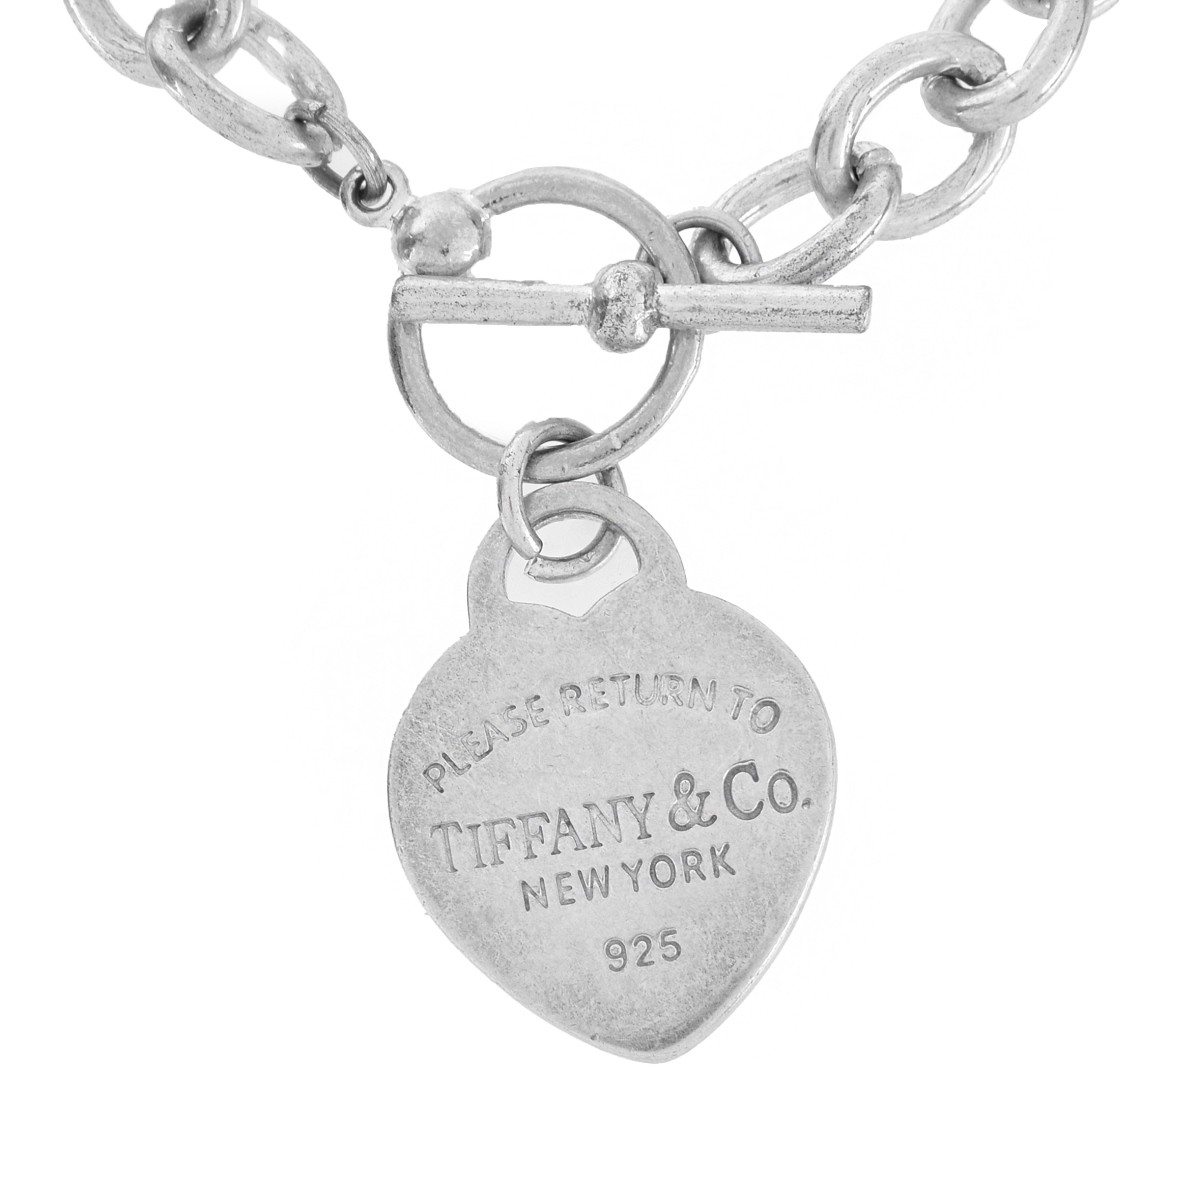 Tiffany & Co Silver Necklace